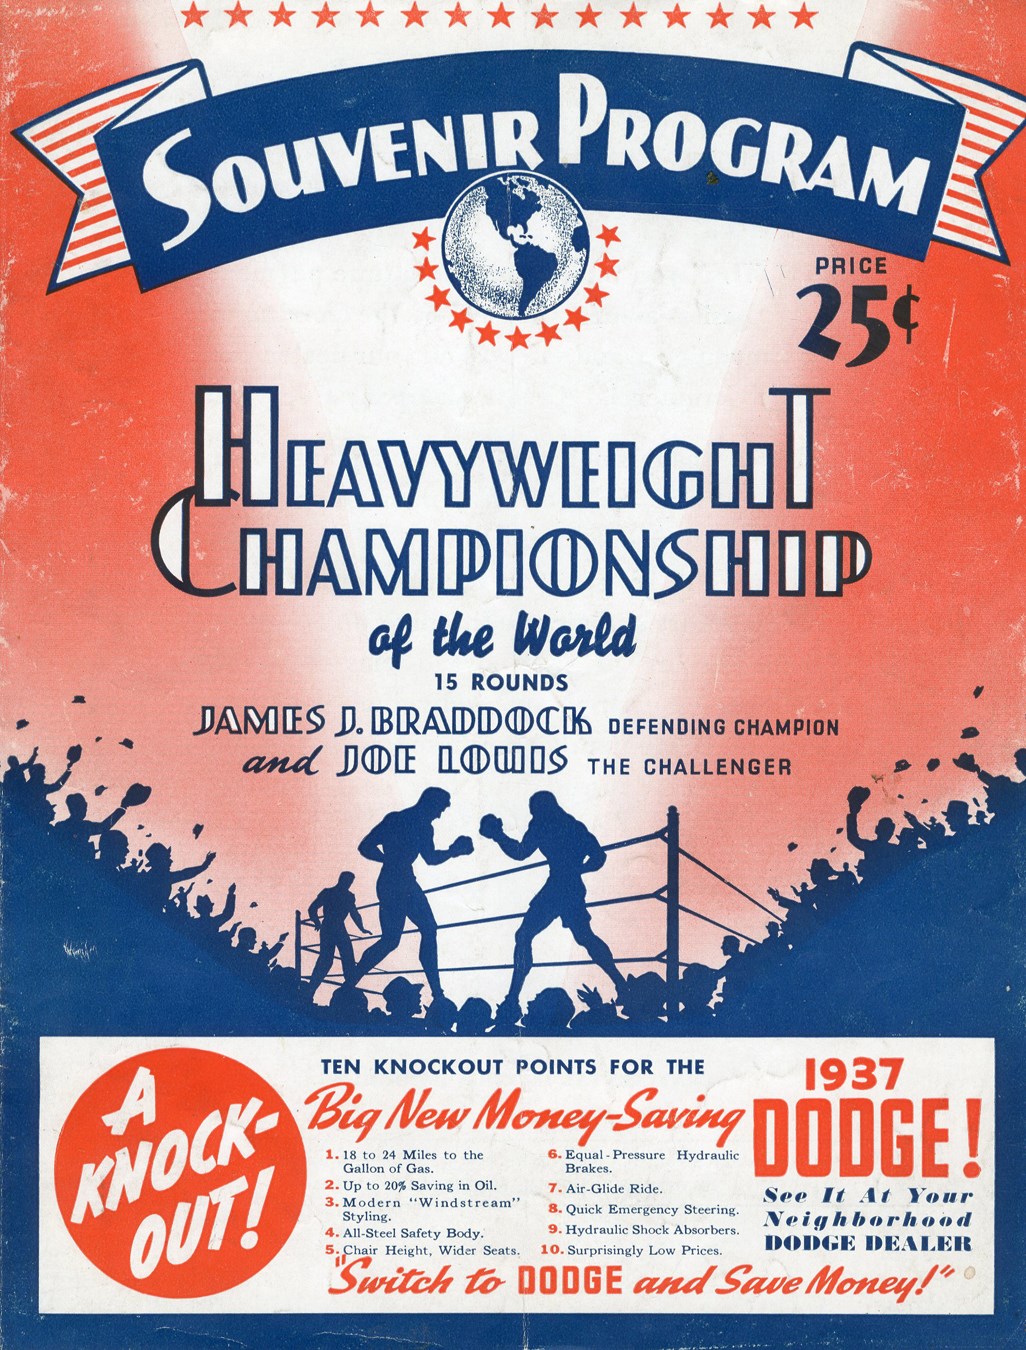 Muhammad Ali & Boxing - Louis-Braddock Official Program (1937)